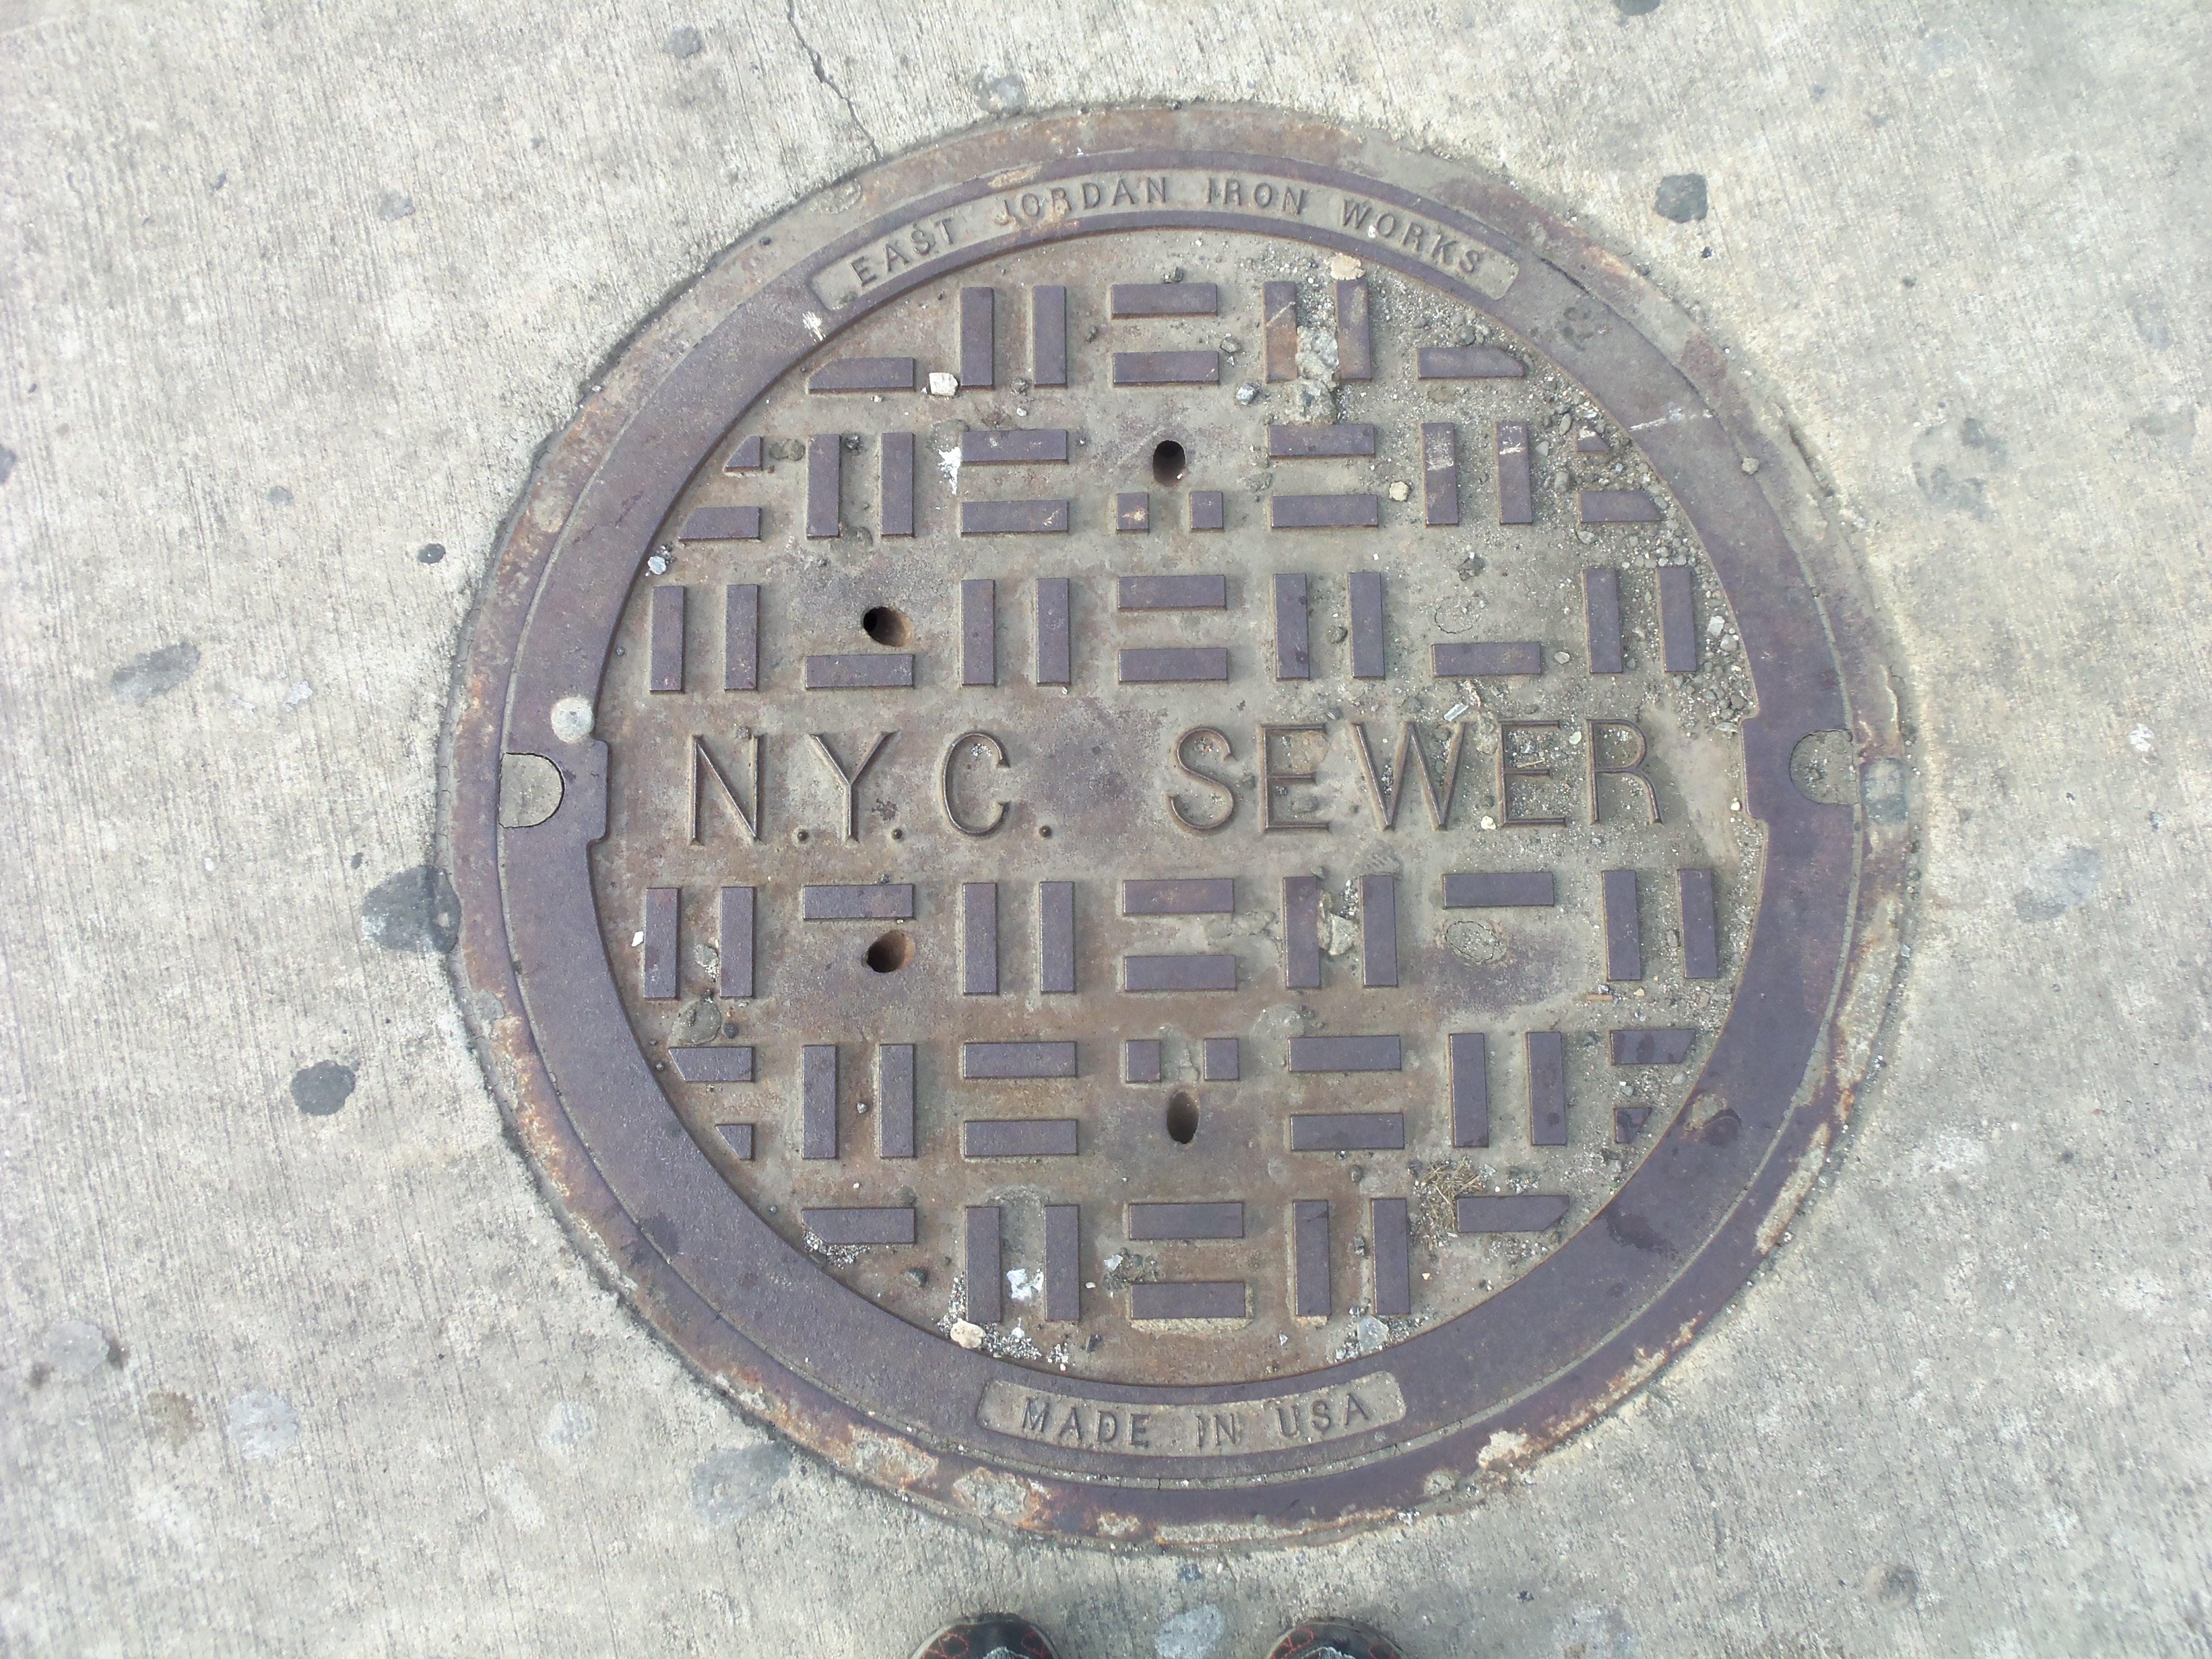 NYC Sewer - East Jordan Iron Works